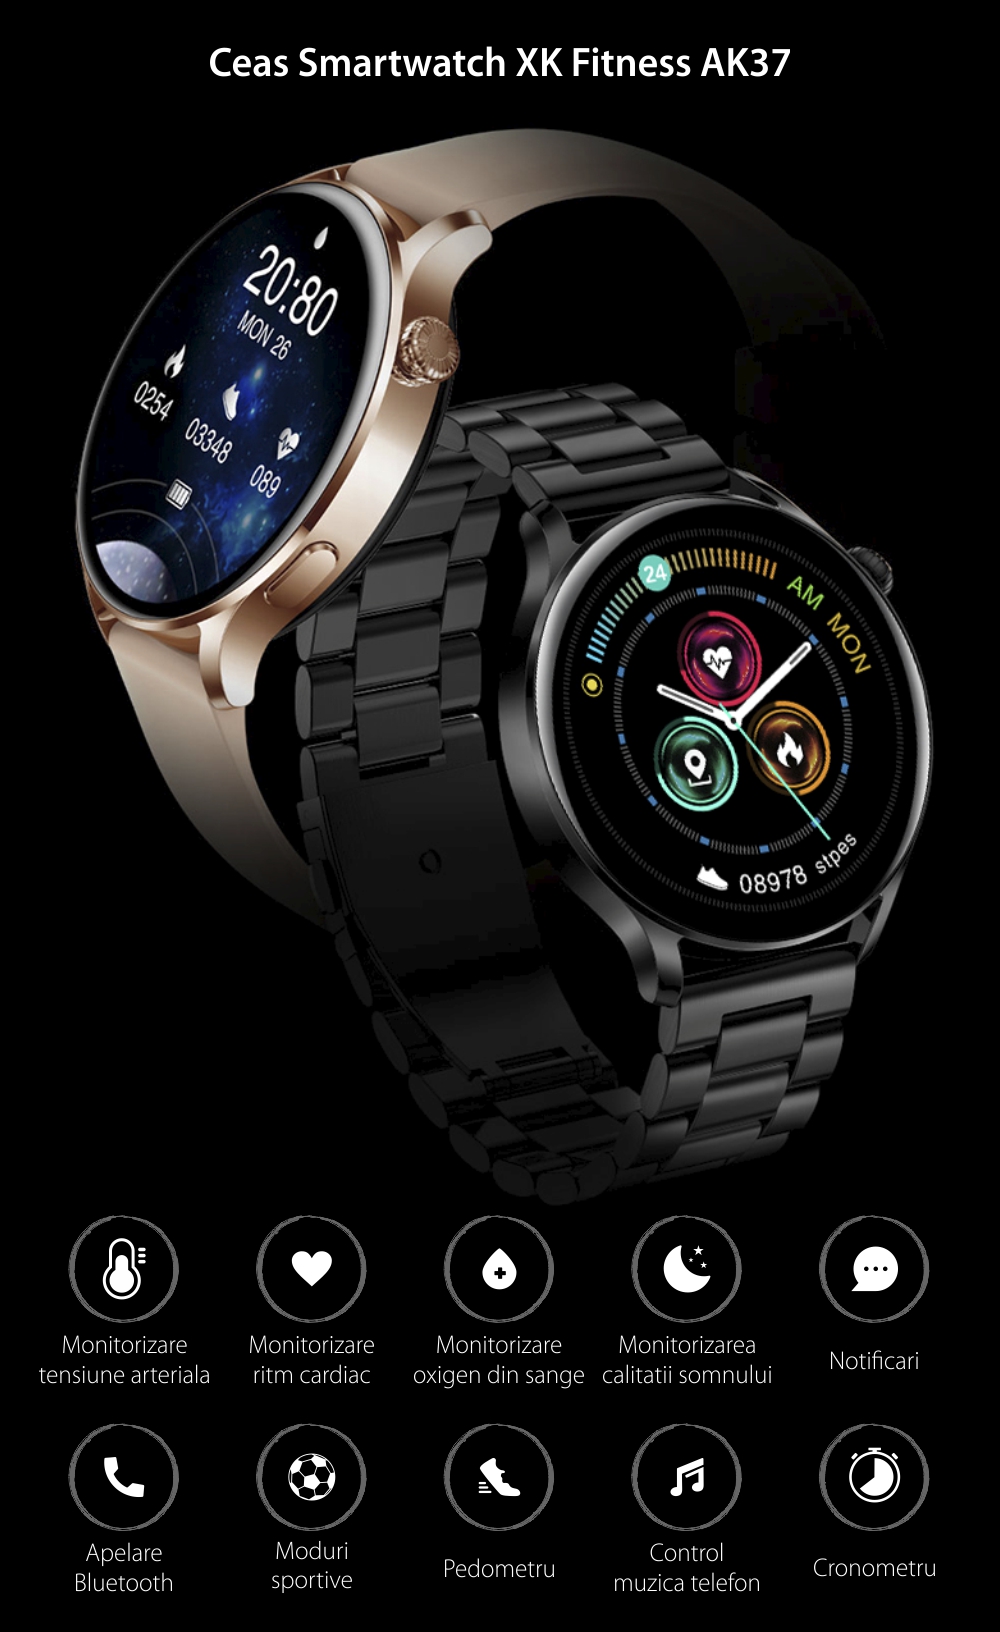 Ceas Smartwatch XK Fitness AK37 cu Functii monitorizare sanatate, Notificari, Bluetooth, Cronometru, Bratara silicon, Negru